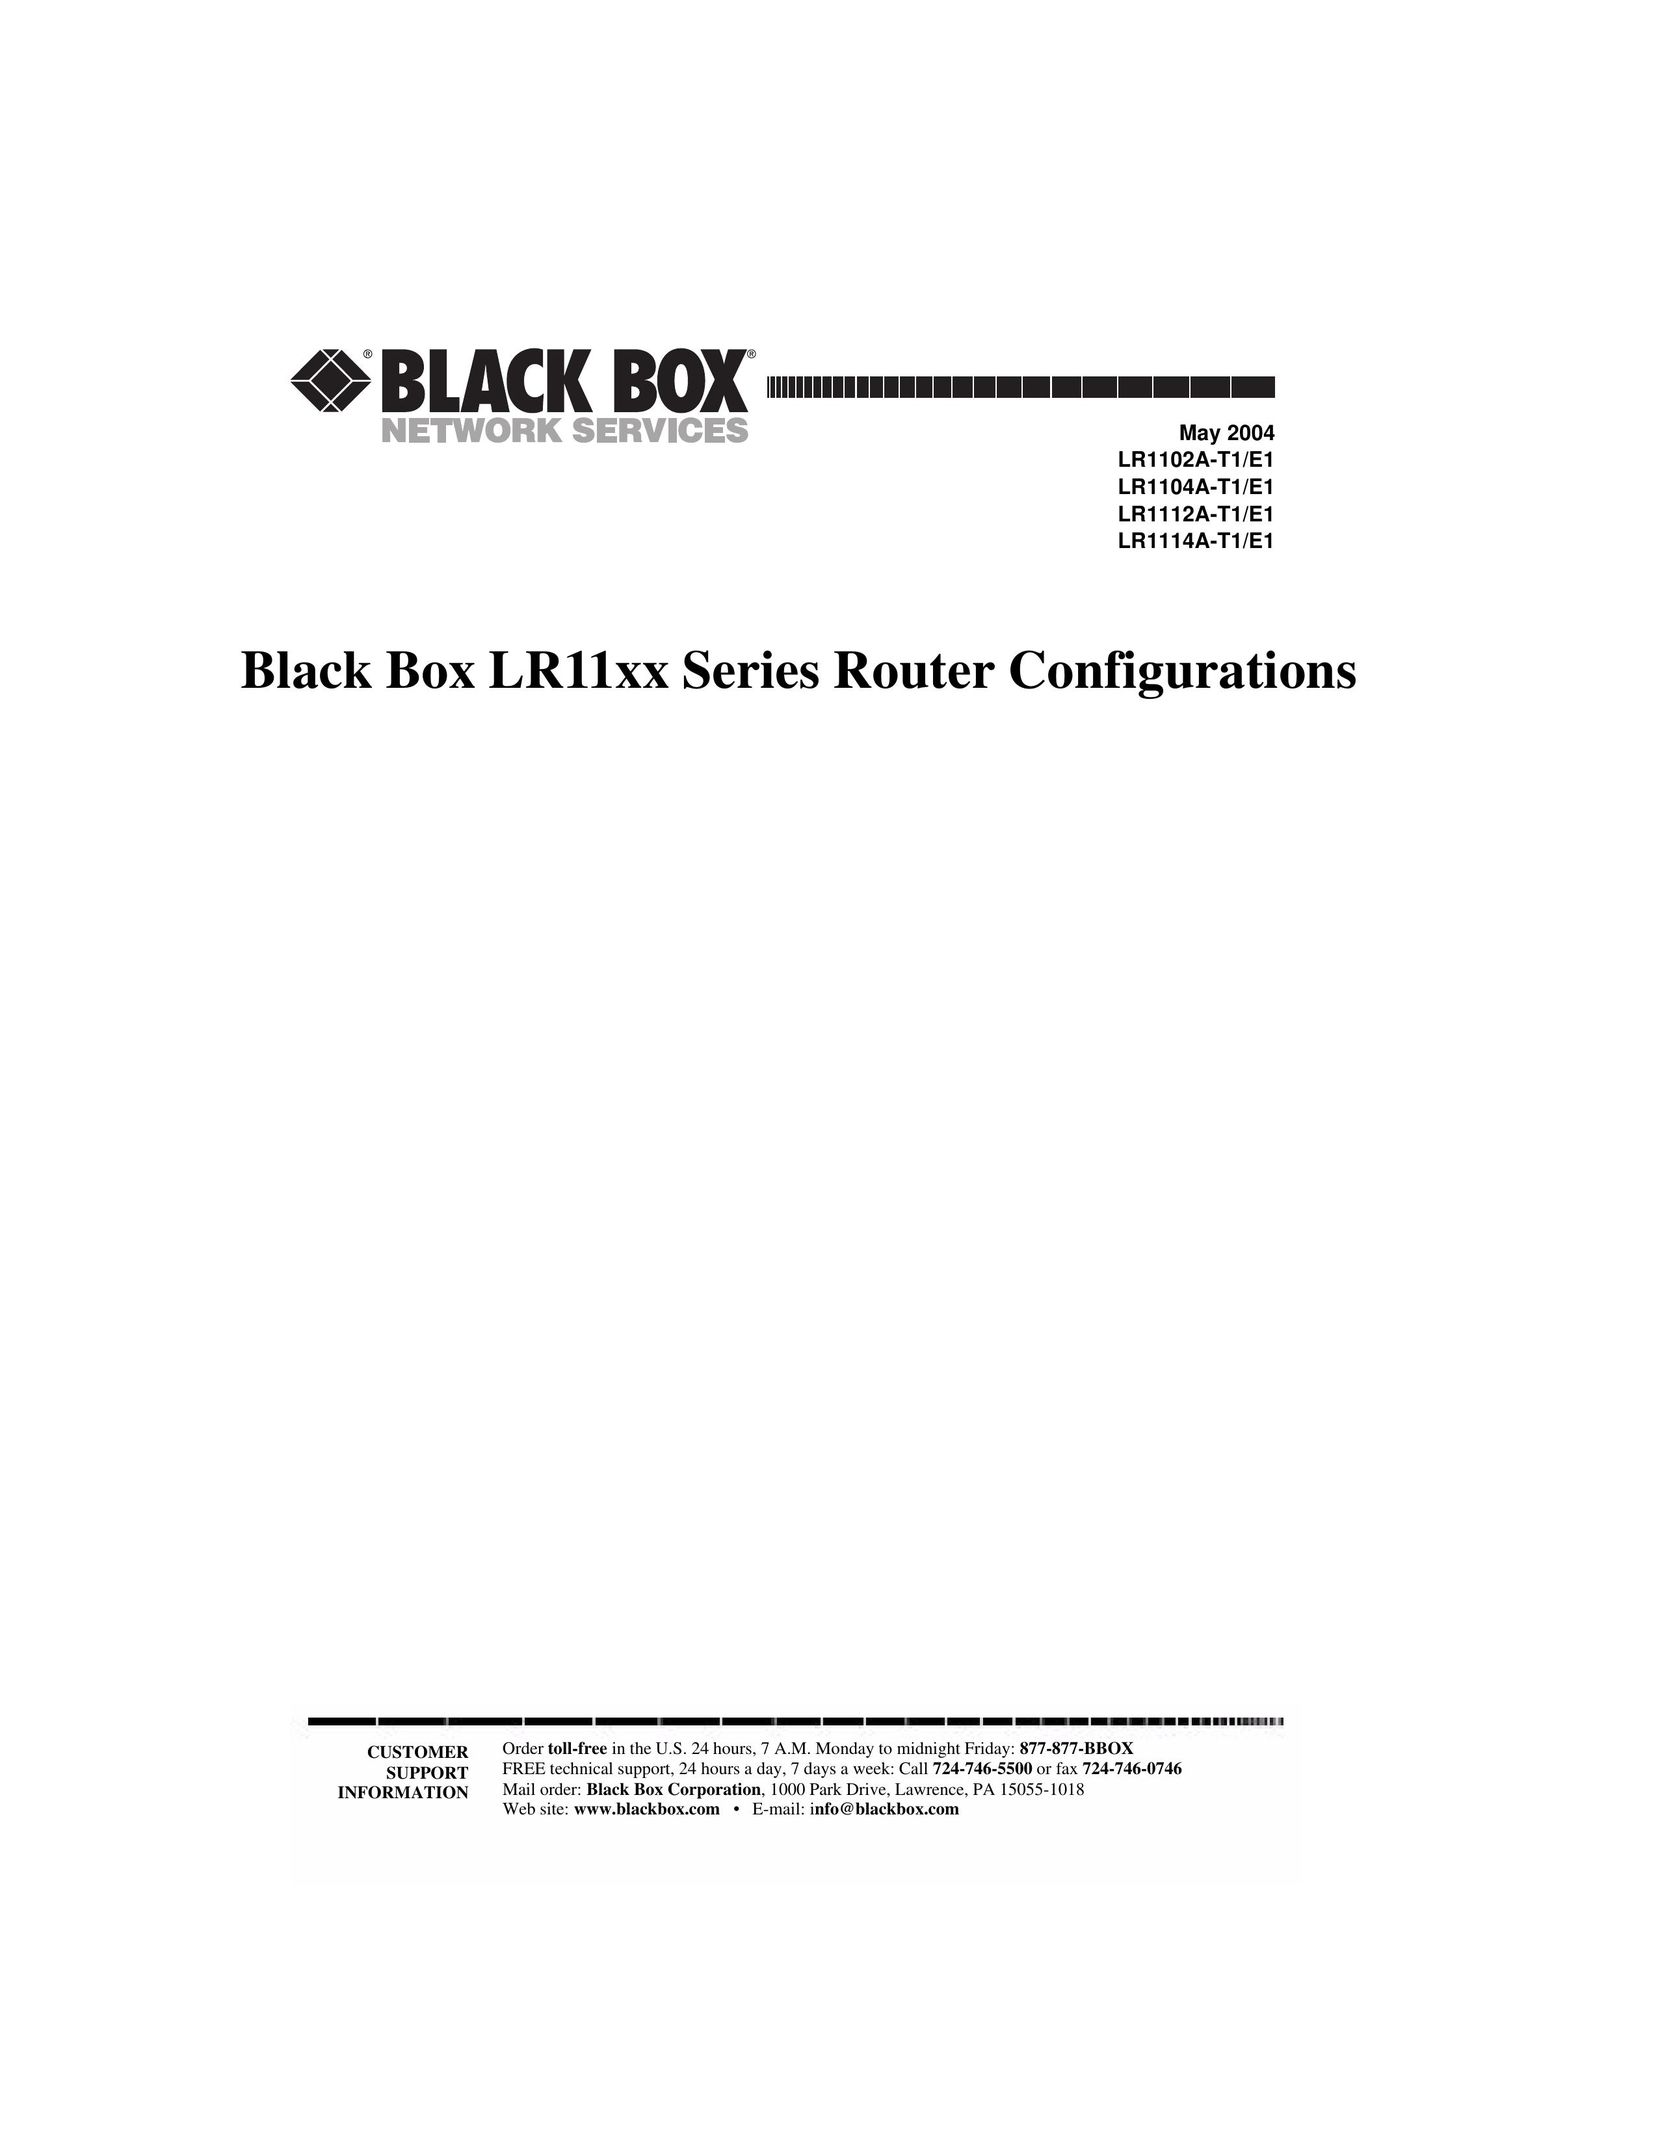 Black Box LR1102A-T1/E1 Network Router User Manual